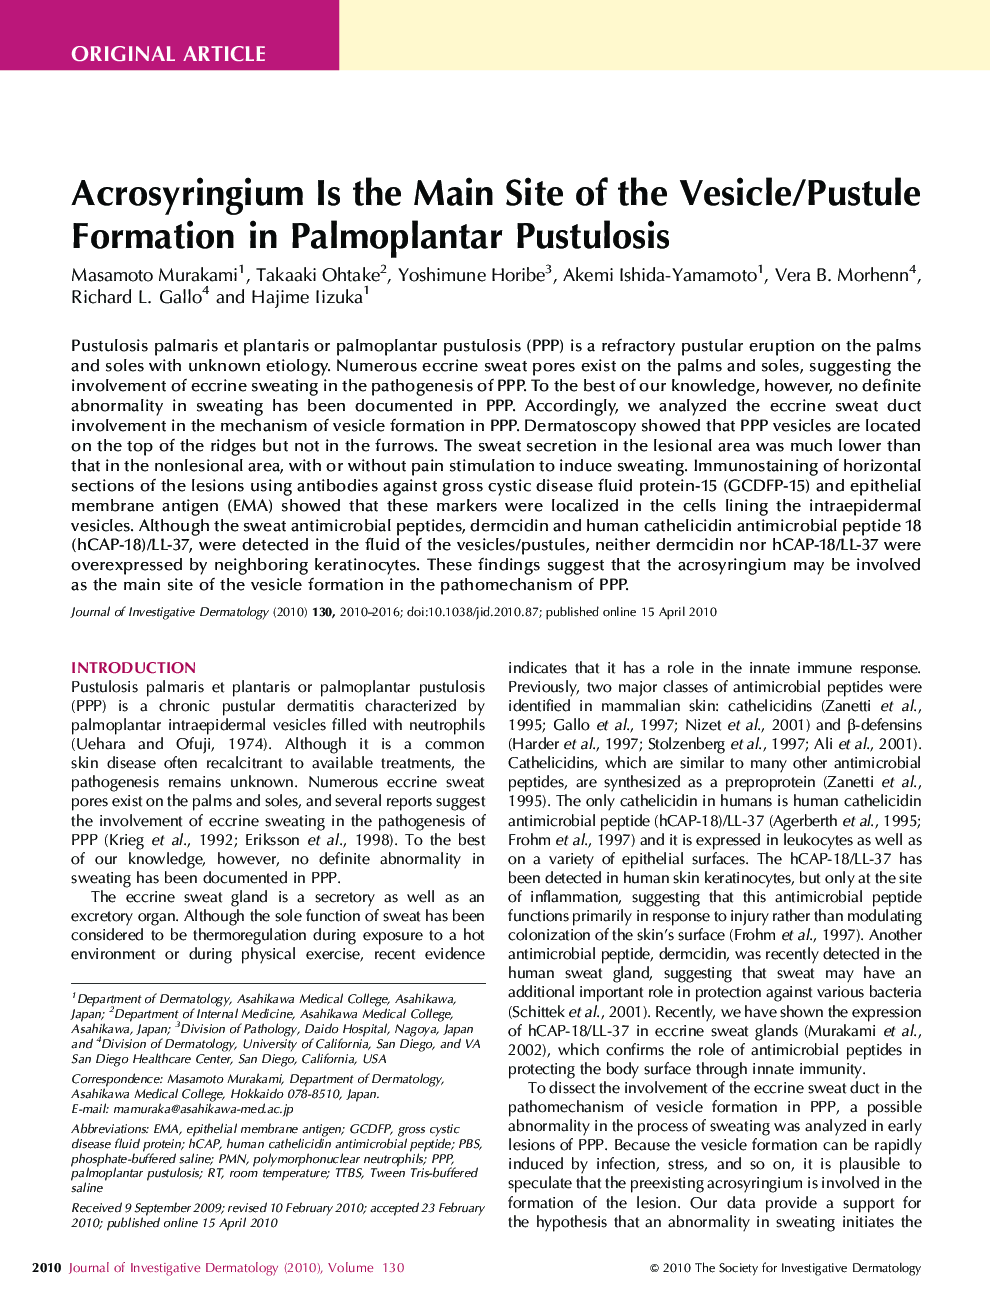 Acrosyringium سایت اصلی سازند Vesicle/Pustule در Pustulosis Palmoplantar است 